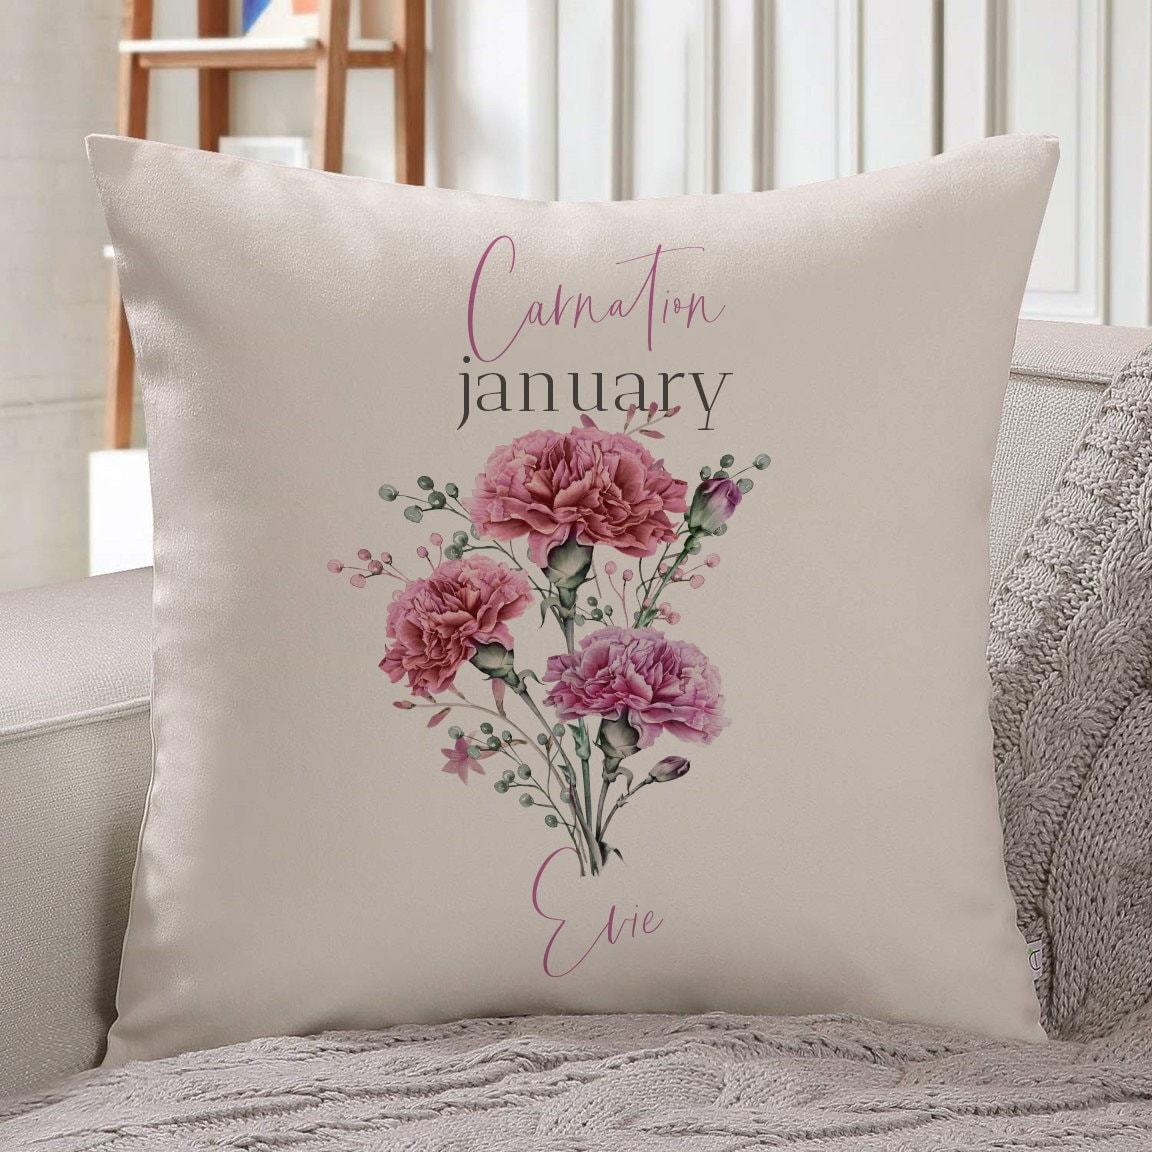 Personalised birth flower cushion, January birth flower carnation, Floral design birthday